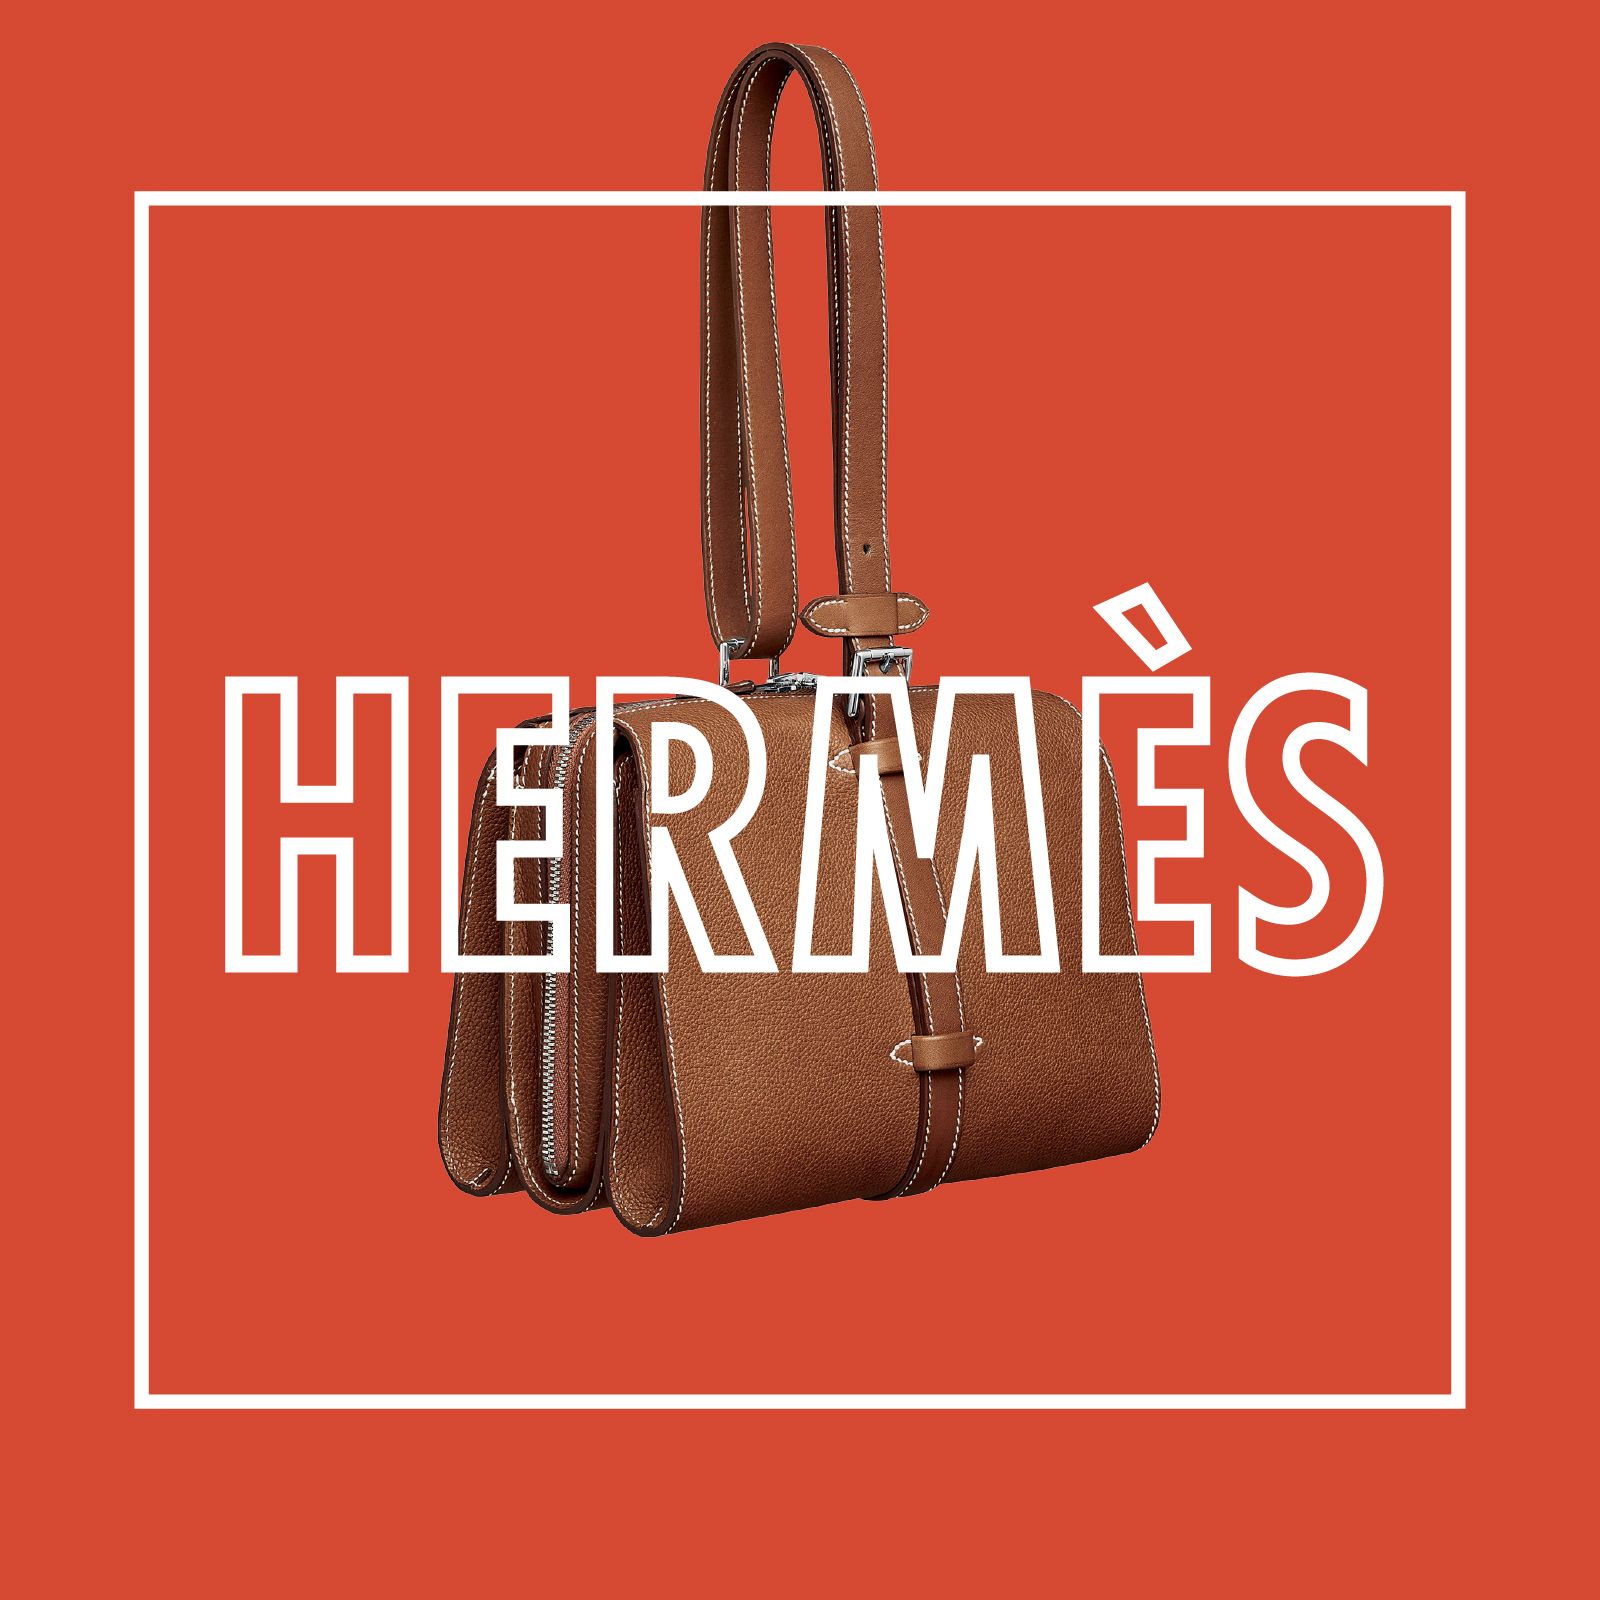 Hermes - エルメス HERMES ロゴ セカンドバッグ クラッチバッグ メイク